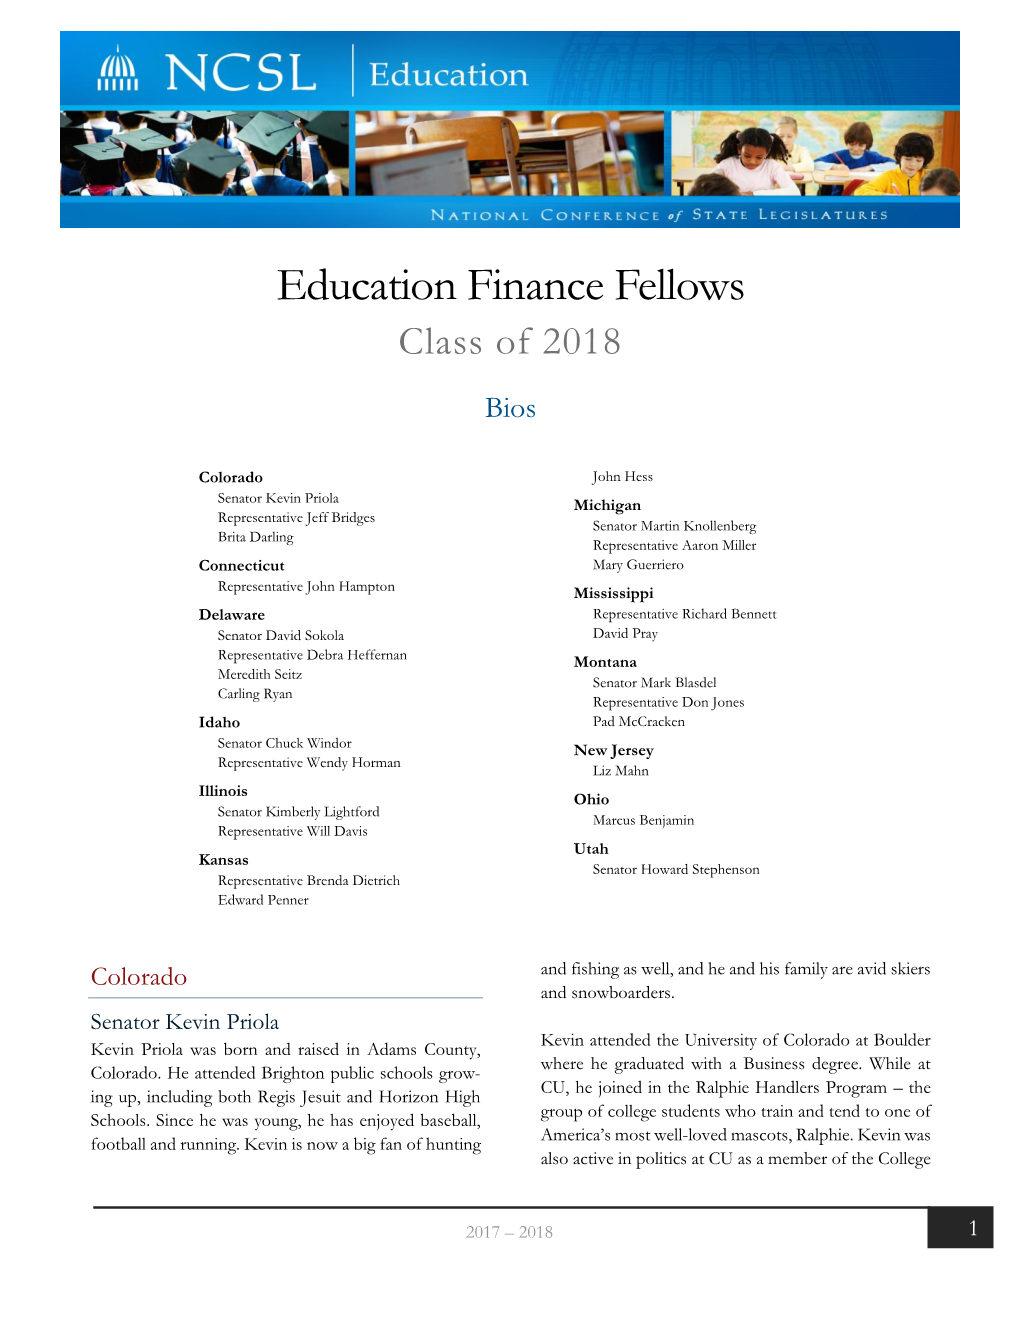 Education Finance Fellows Class of 2018